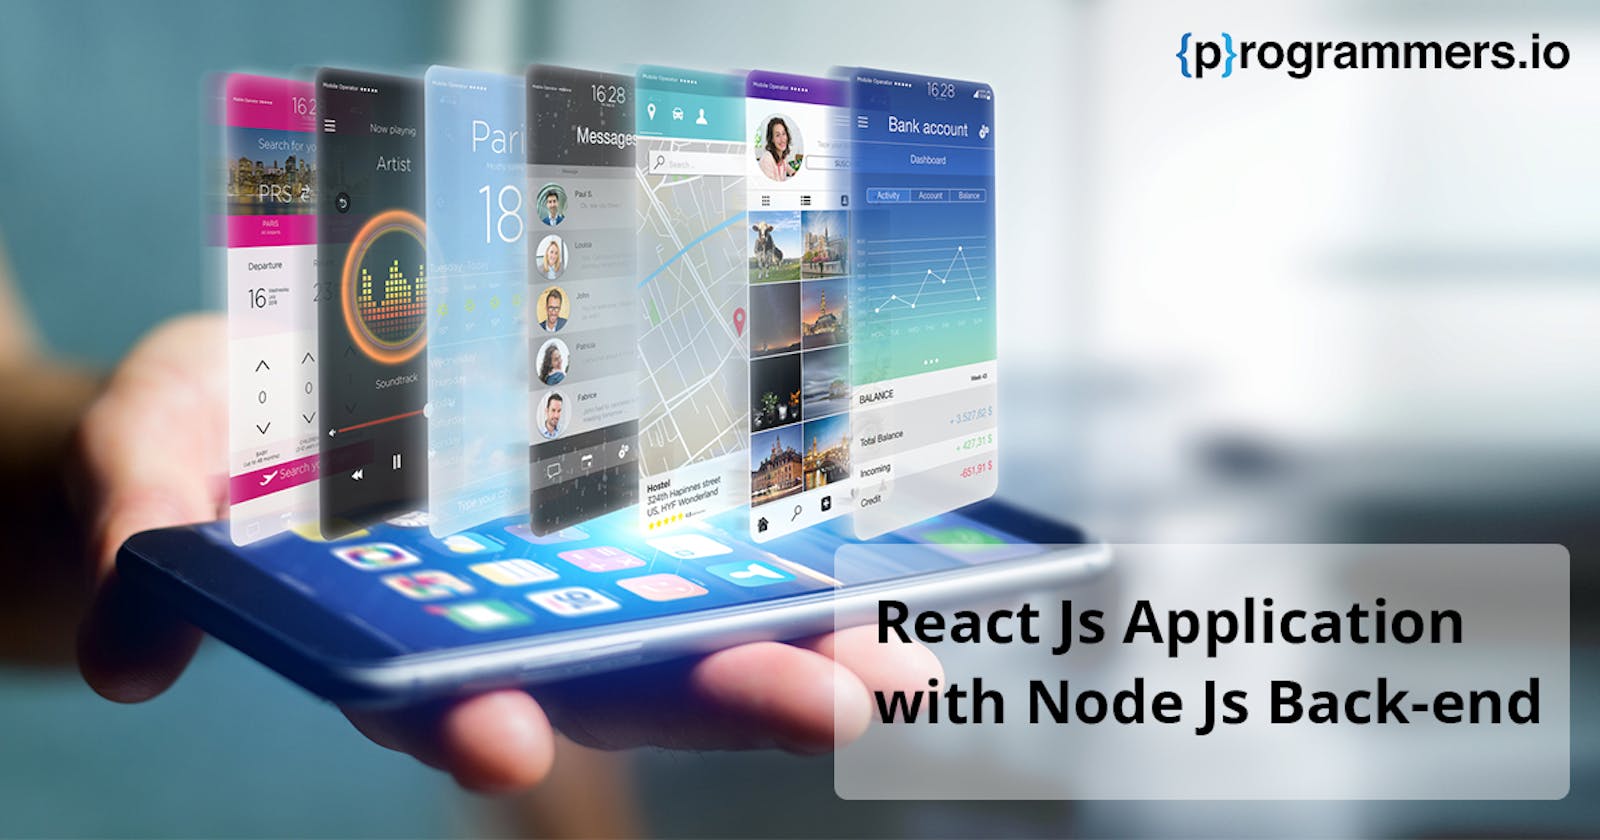 React.JS App with a Node.JS Back-end